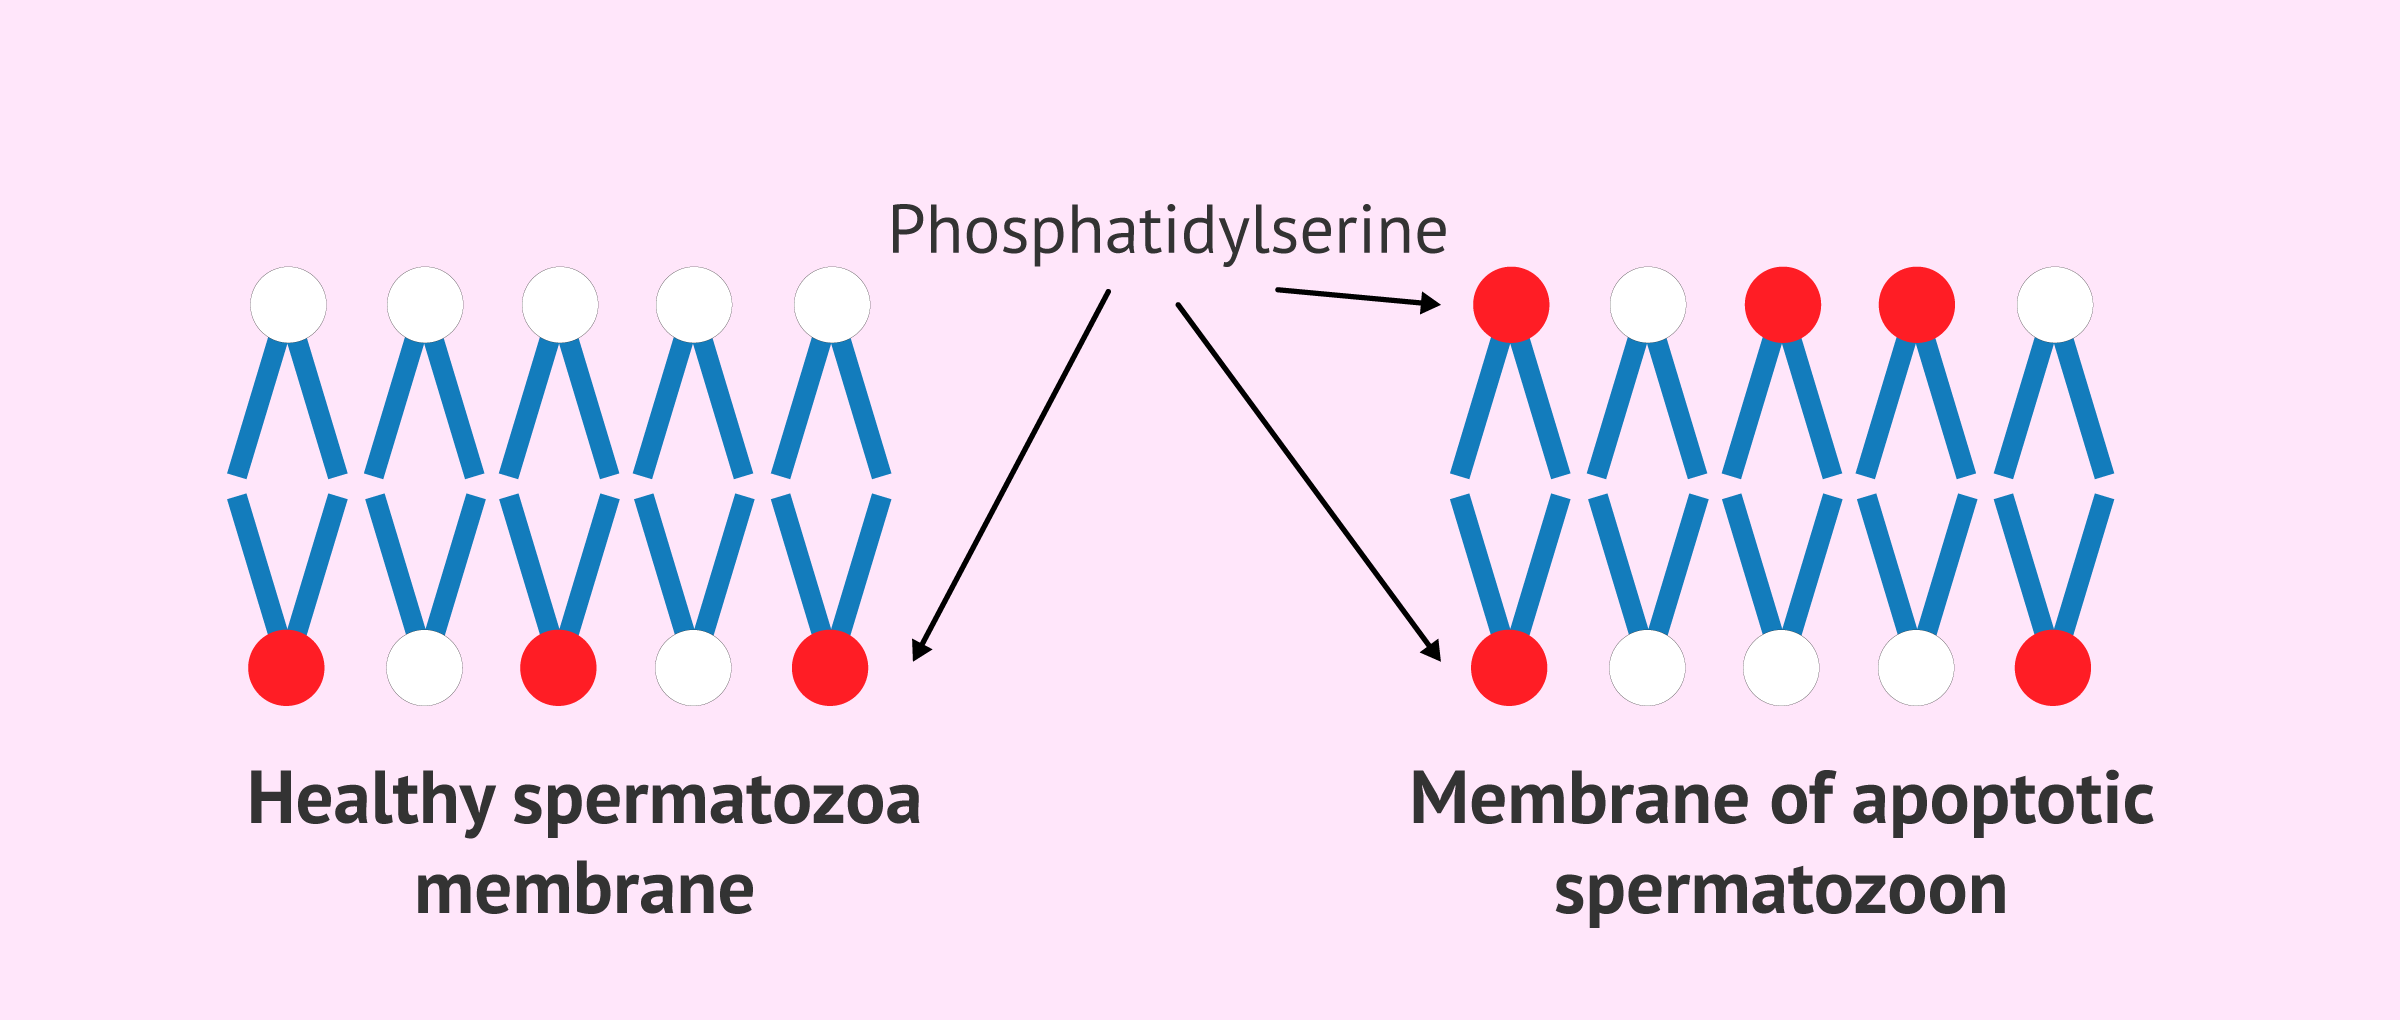 Apoptotic sperm membrane